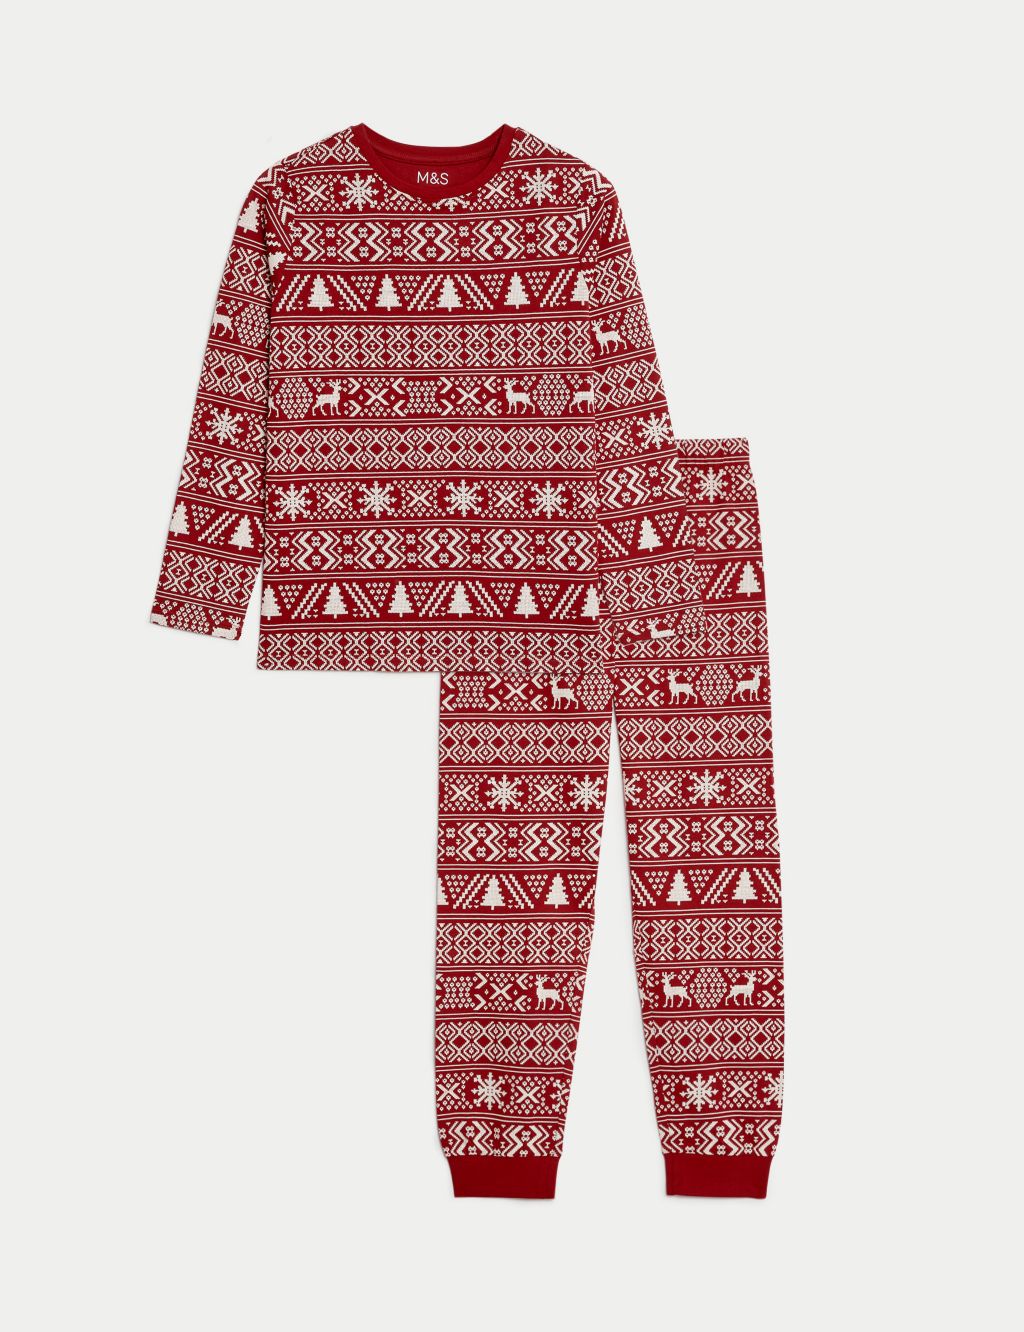 Kids' Fair Isle Christmas Pyjama Set (1-16 Yrs) image 2